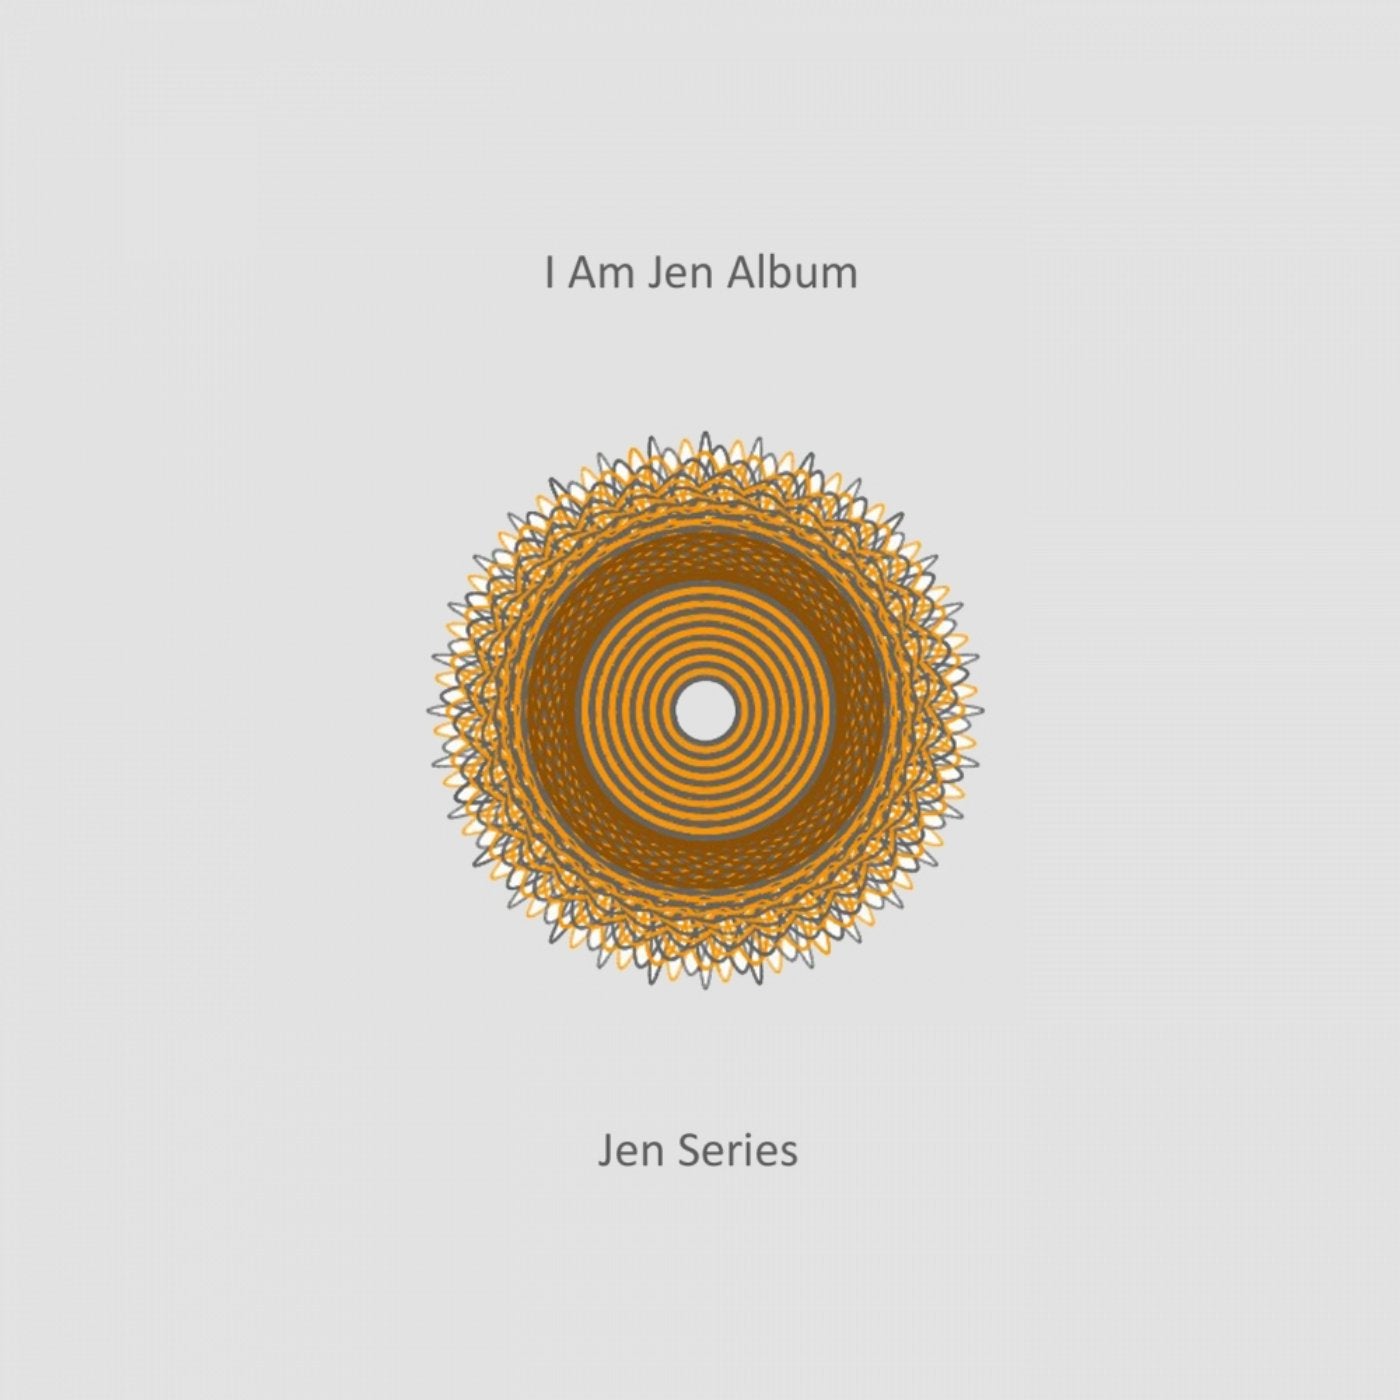 I Am Jen Album